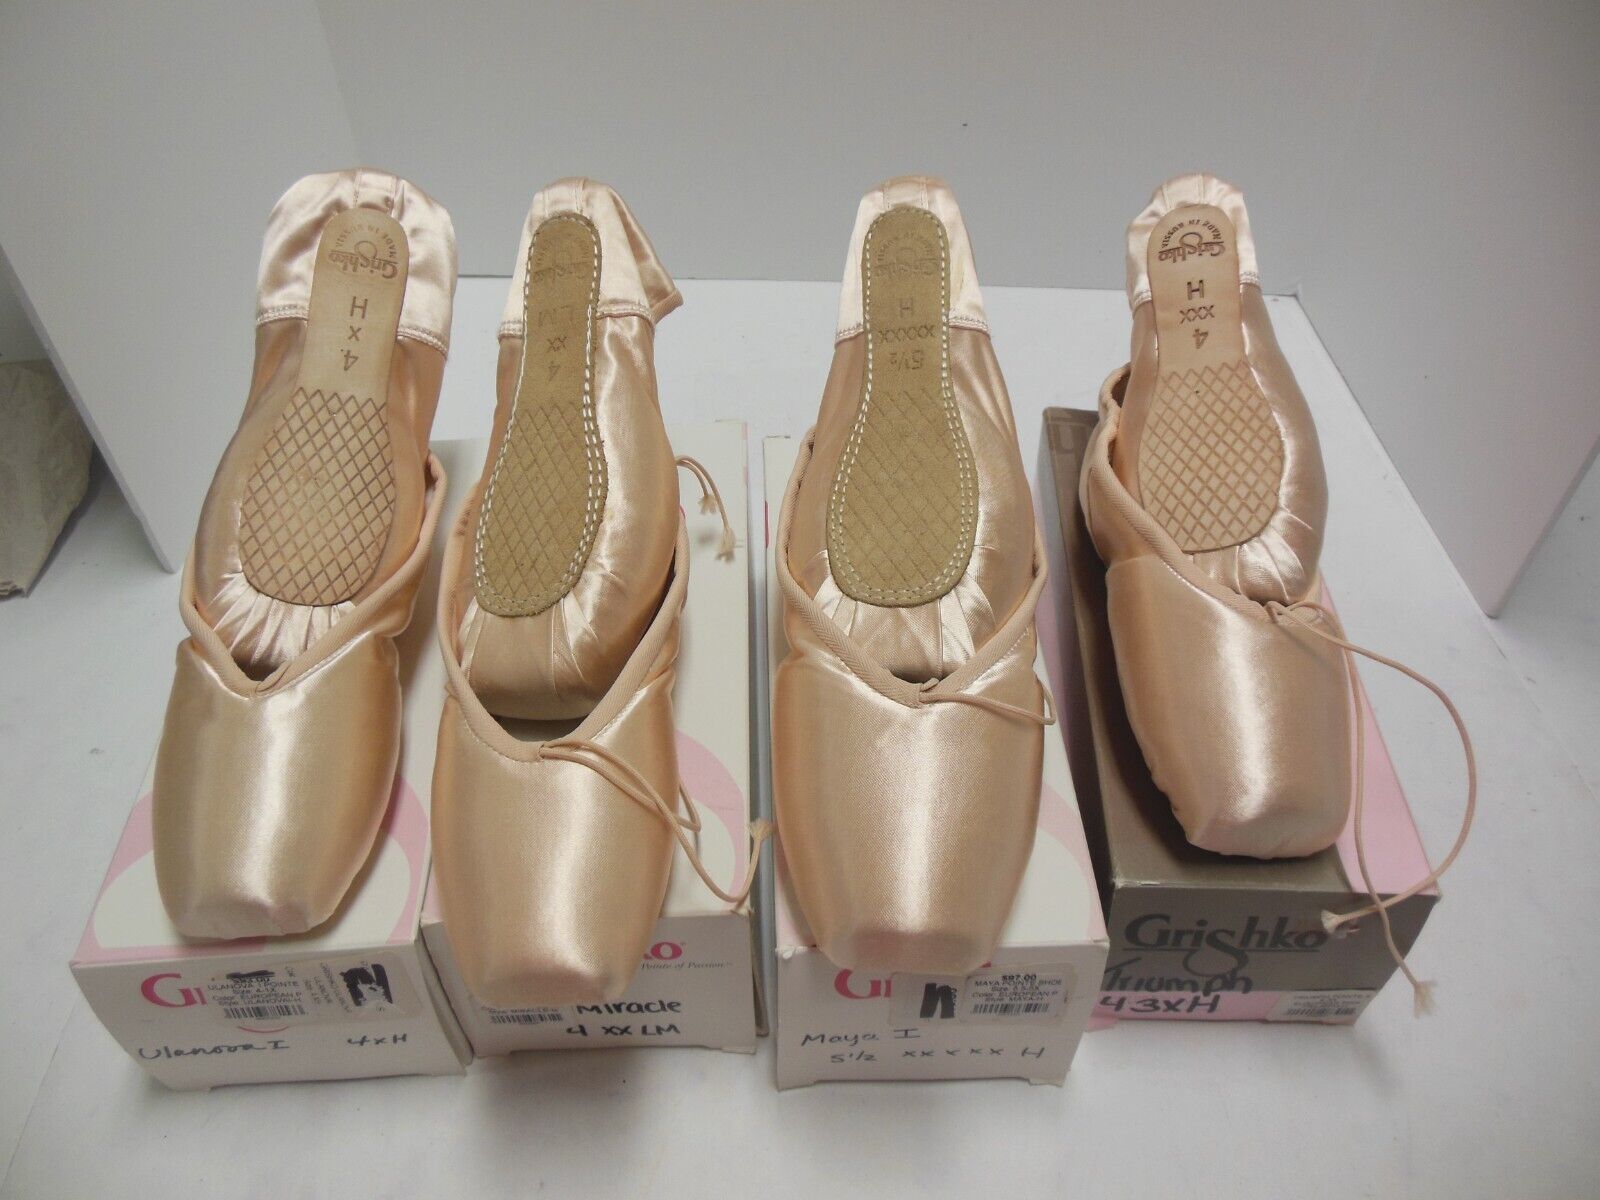 Russian Grishko Pointe Shoes Triumph, Maya 1, Ulanova 1, Miracle Satin toe